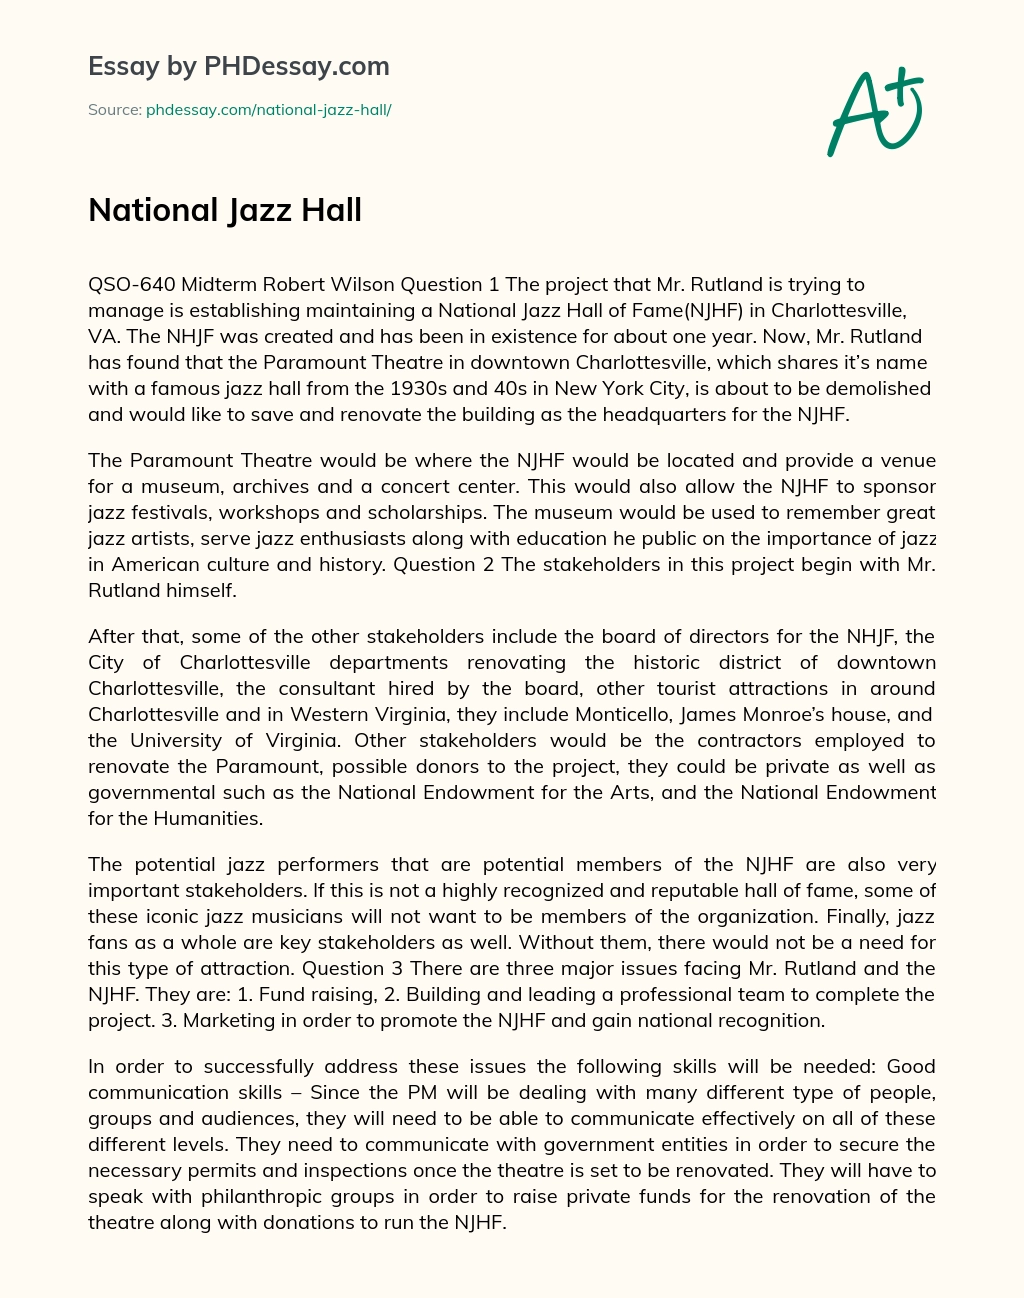 National Jazz Hall essay